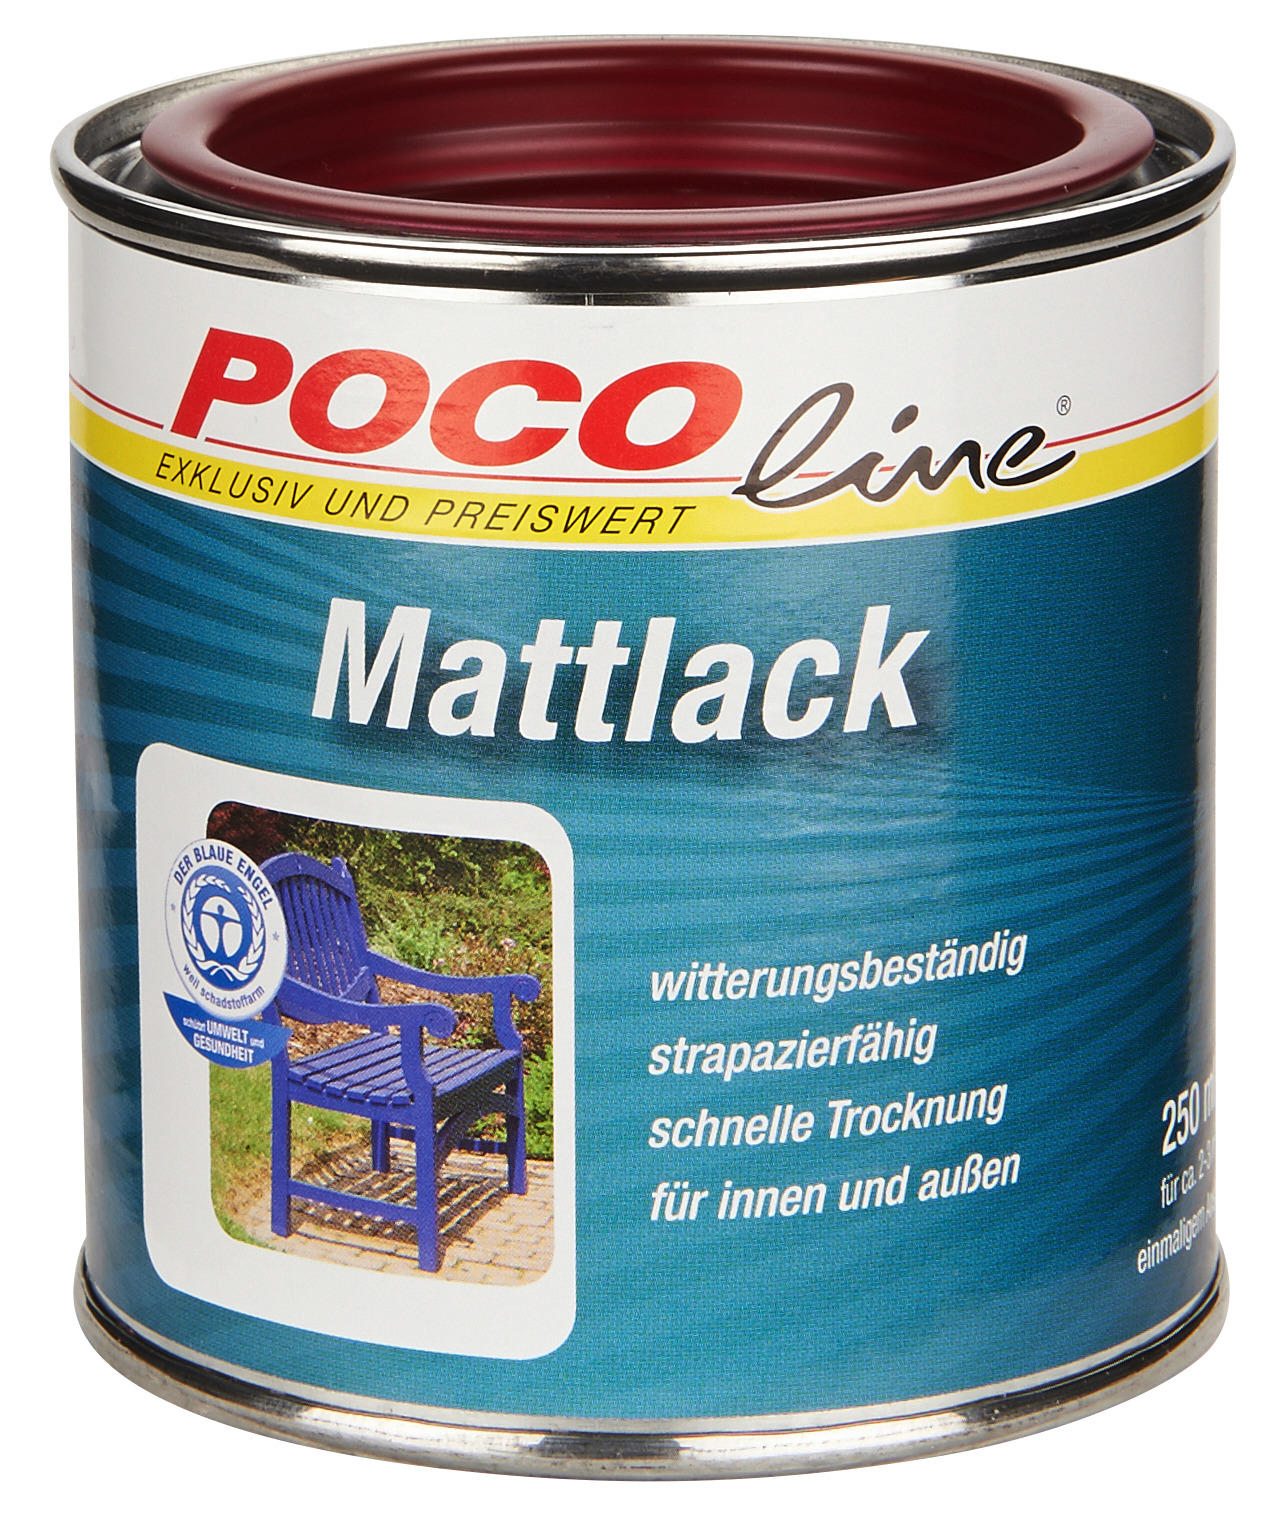 POCOline Acyl Buntlack bordeauxrot matt ca. 0,25 l Mattlack_Acryl_2in1 250ml - bordeauxrot (250ml)